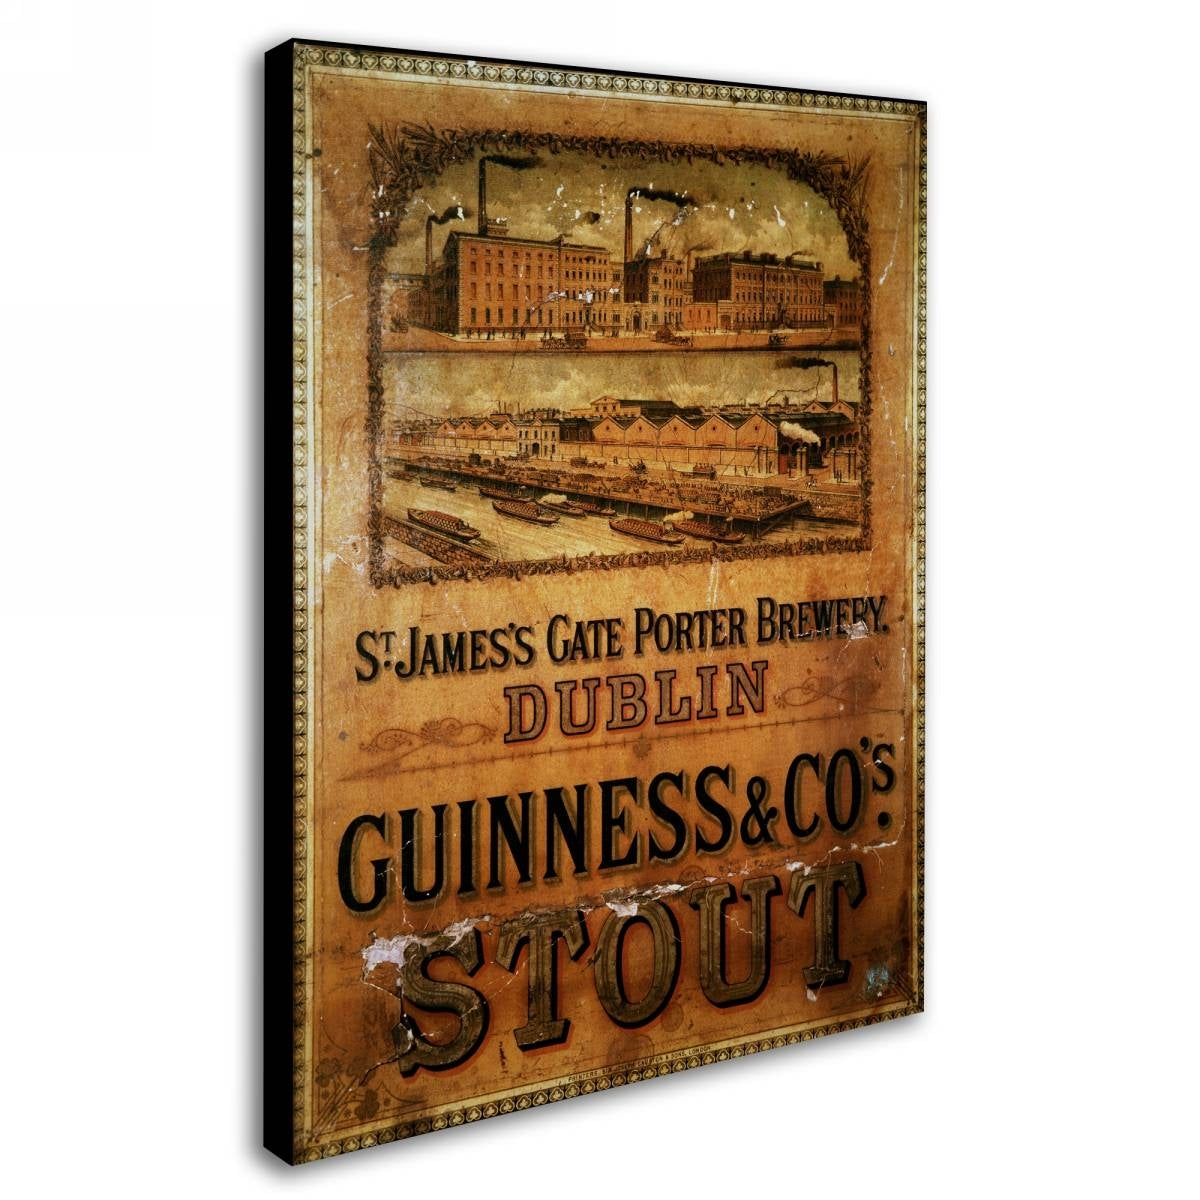 Guinness Brewery 'St. James' Gate Porter Brewery' Canvas Art